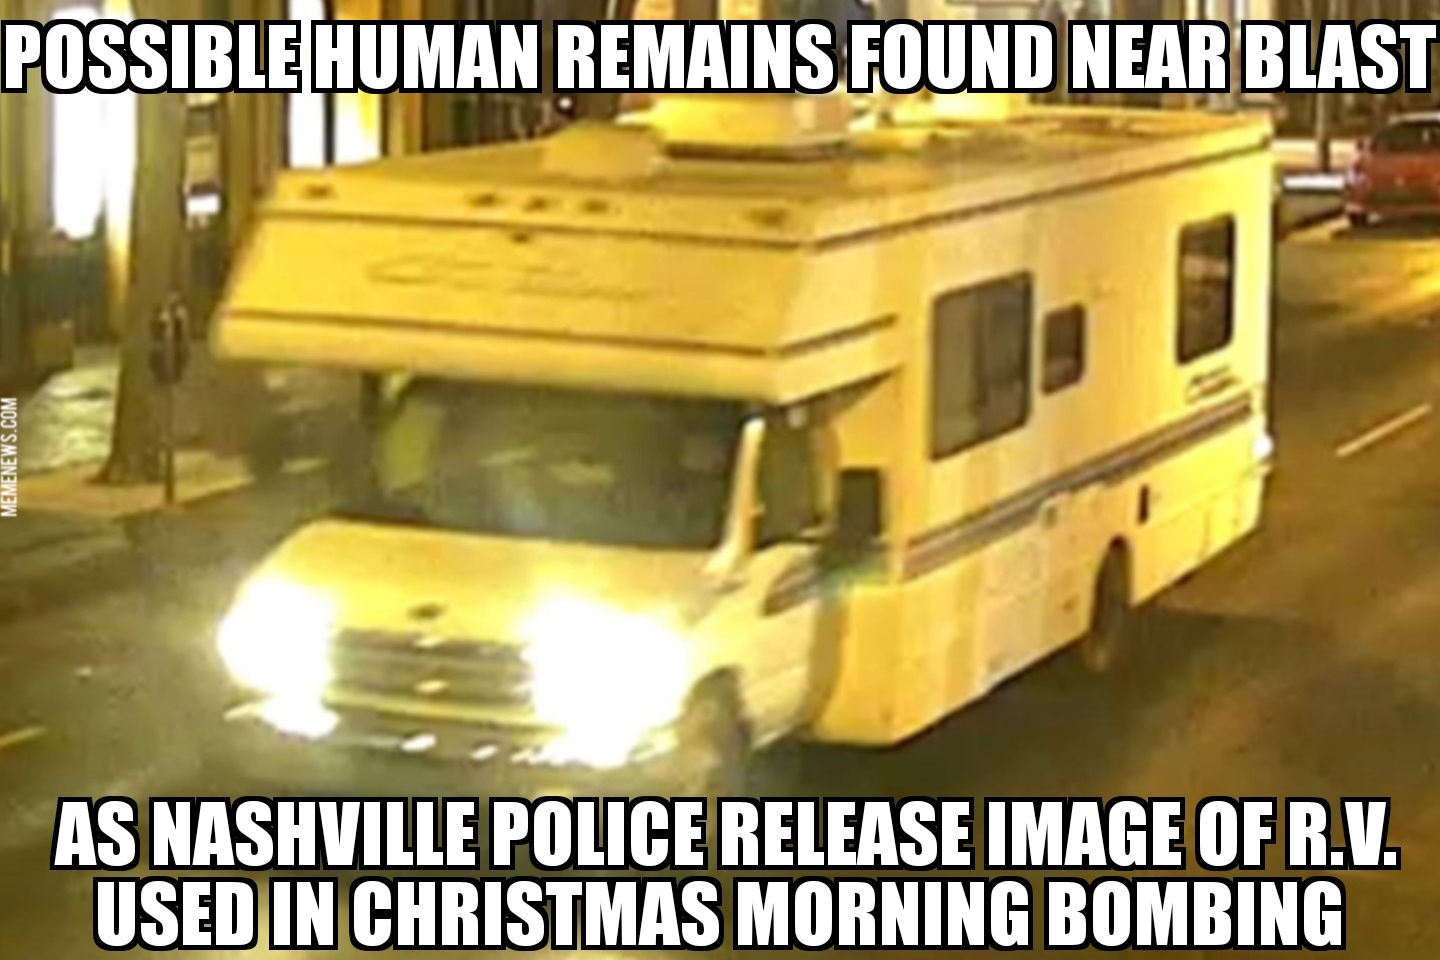 Image released of Nashville bombing vehicle